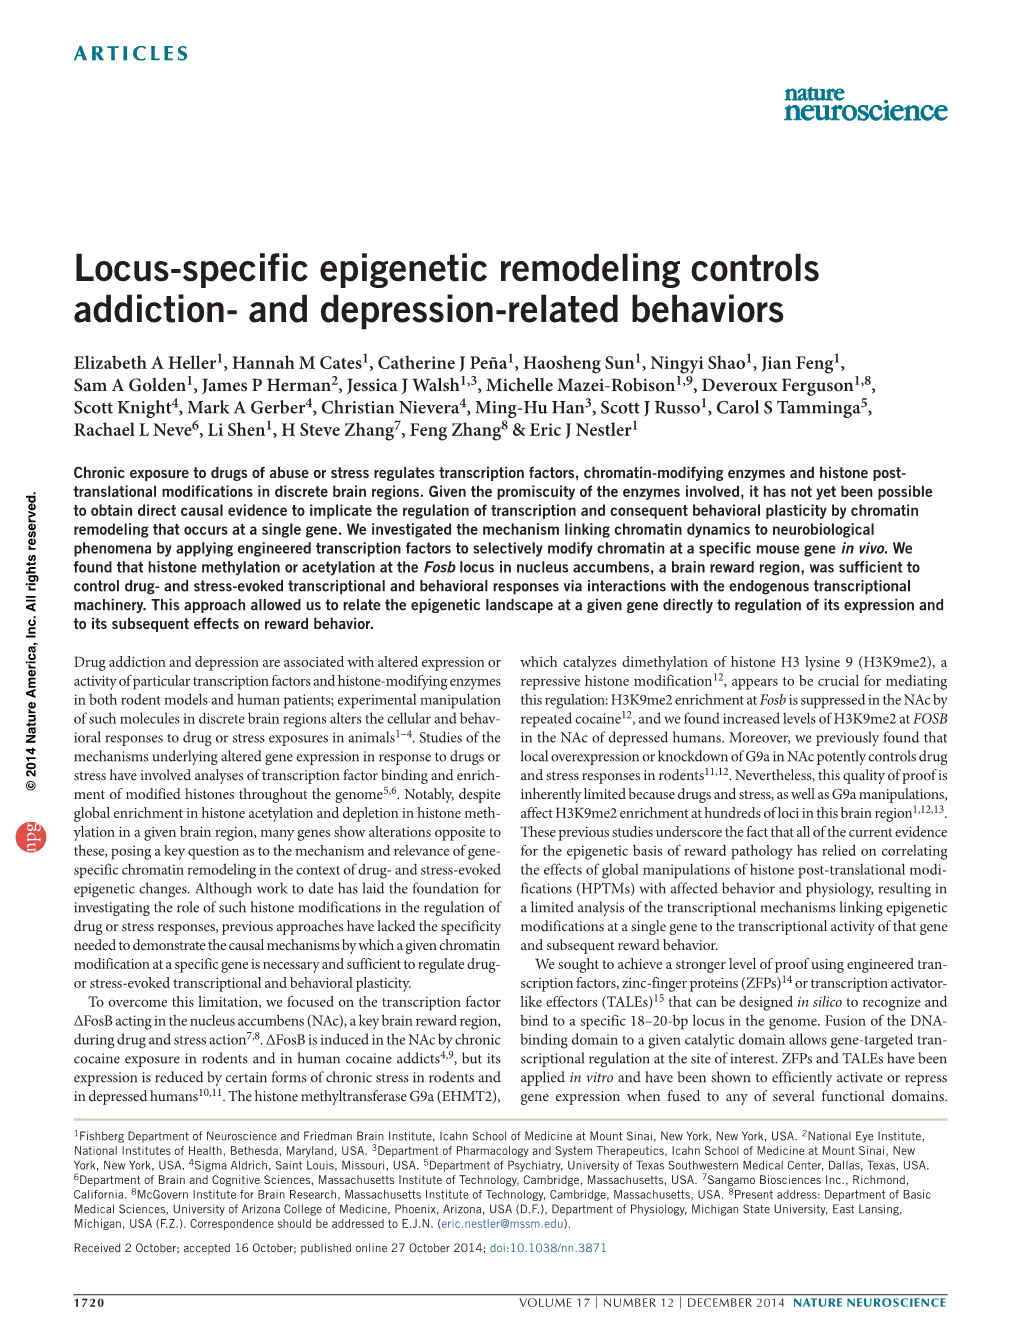 Locus-Specific Epigenetic Remodeling Controls Addiction- and Depression-Related Behaviors